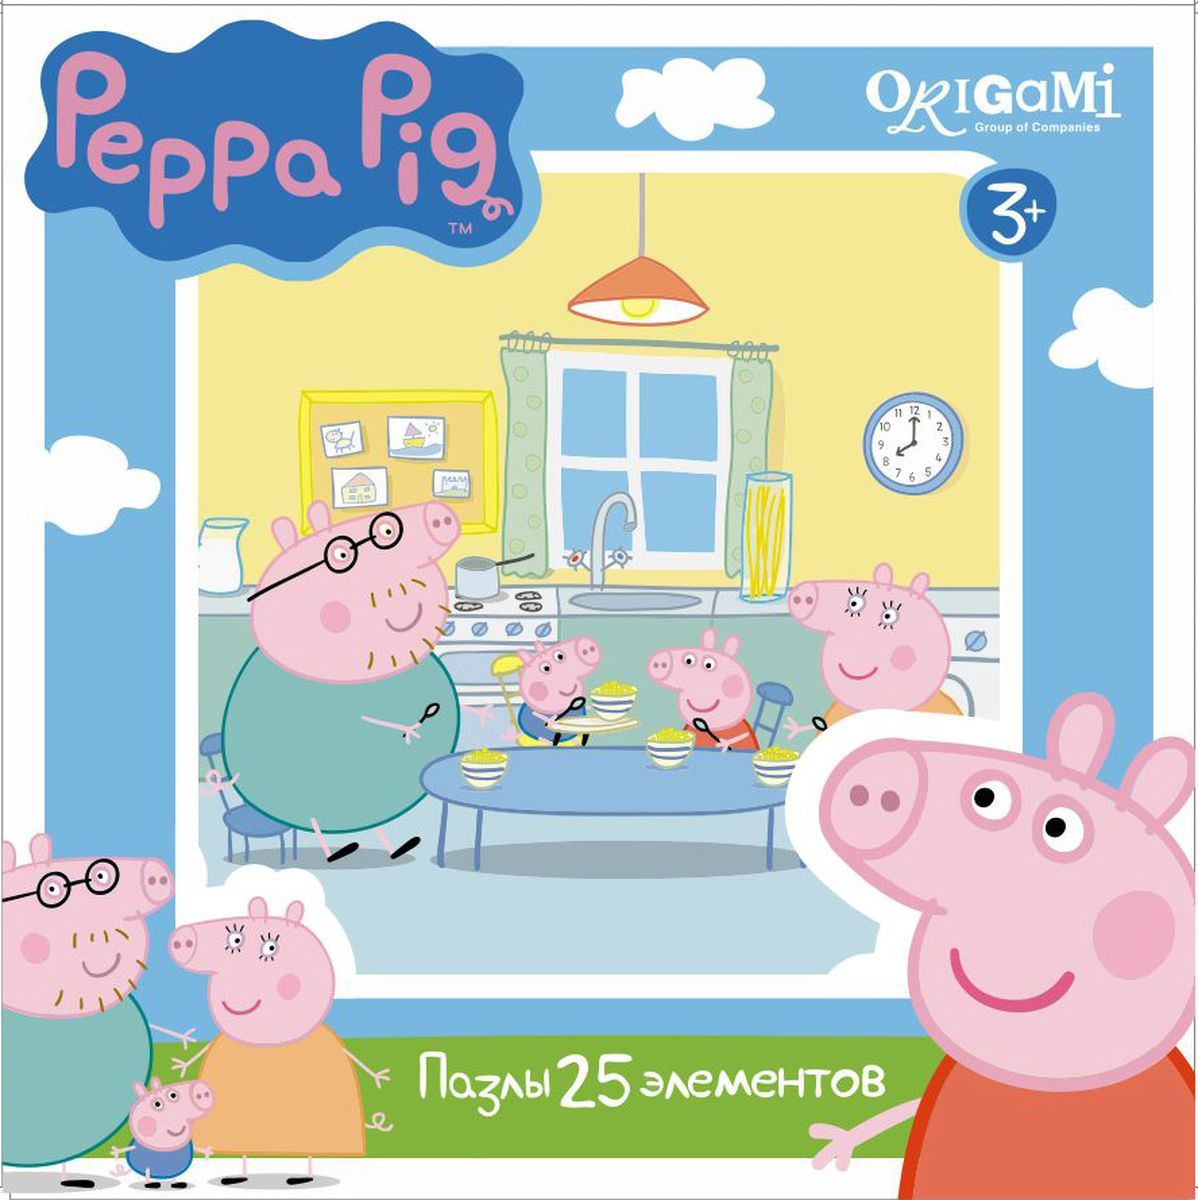     Peppa Pig 01581